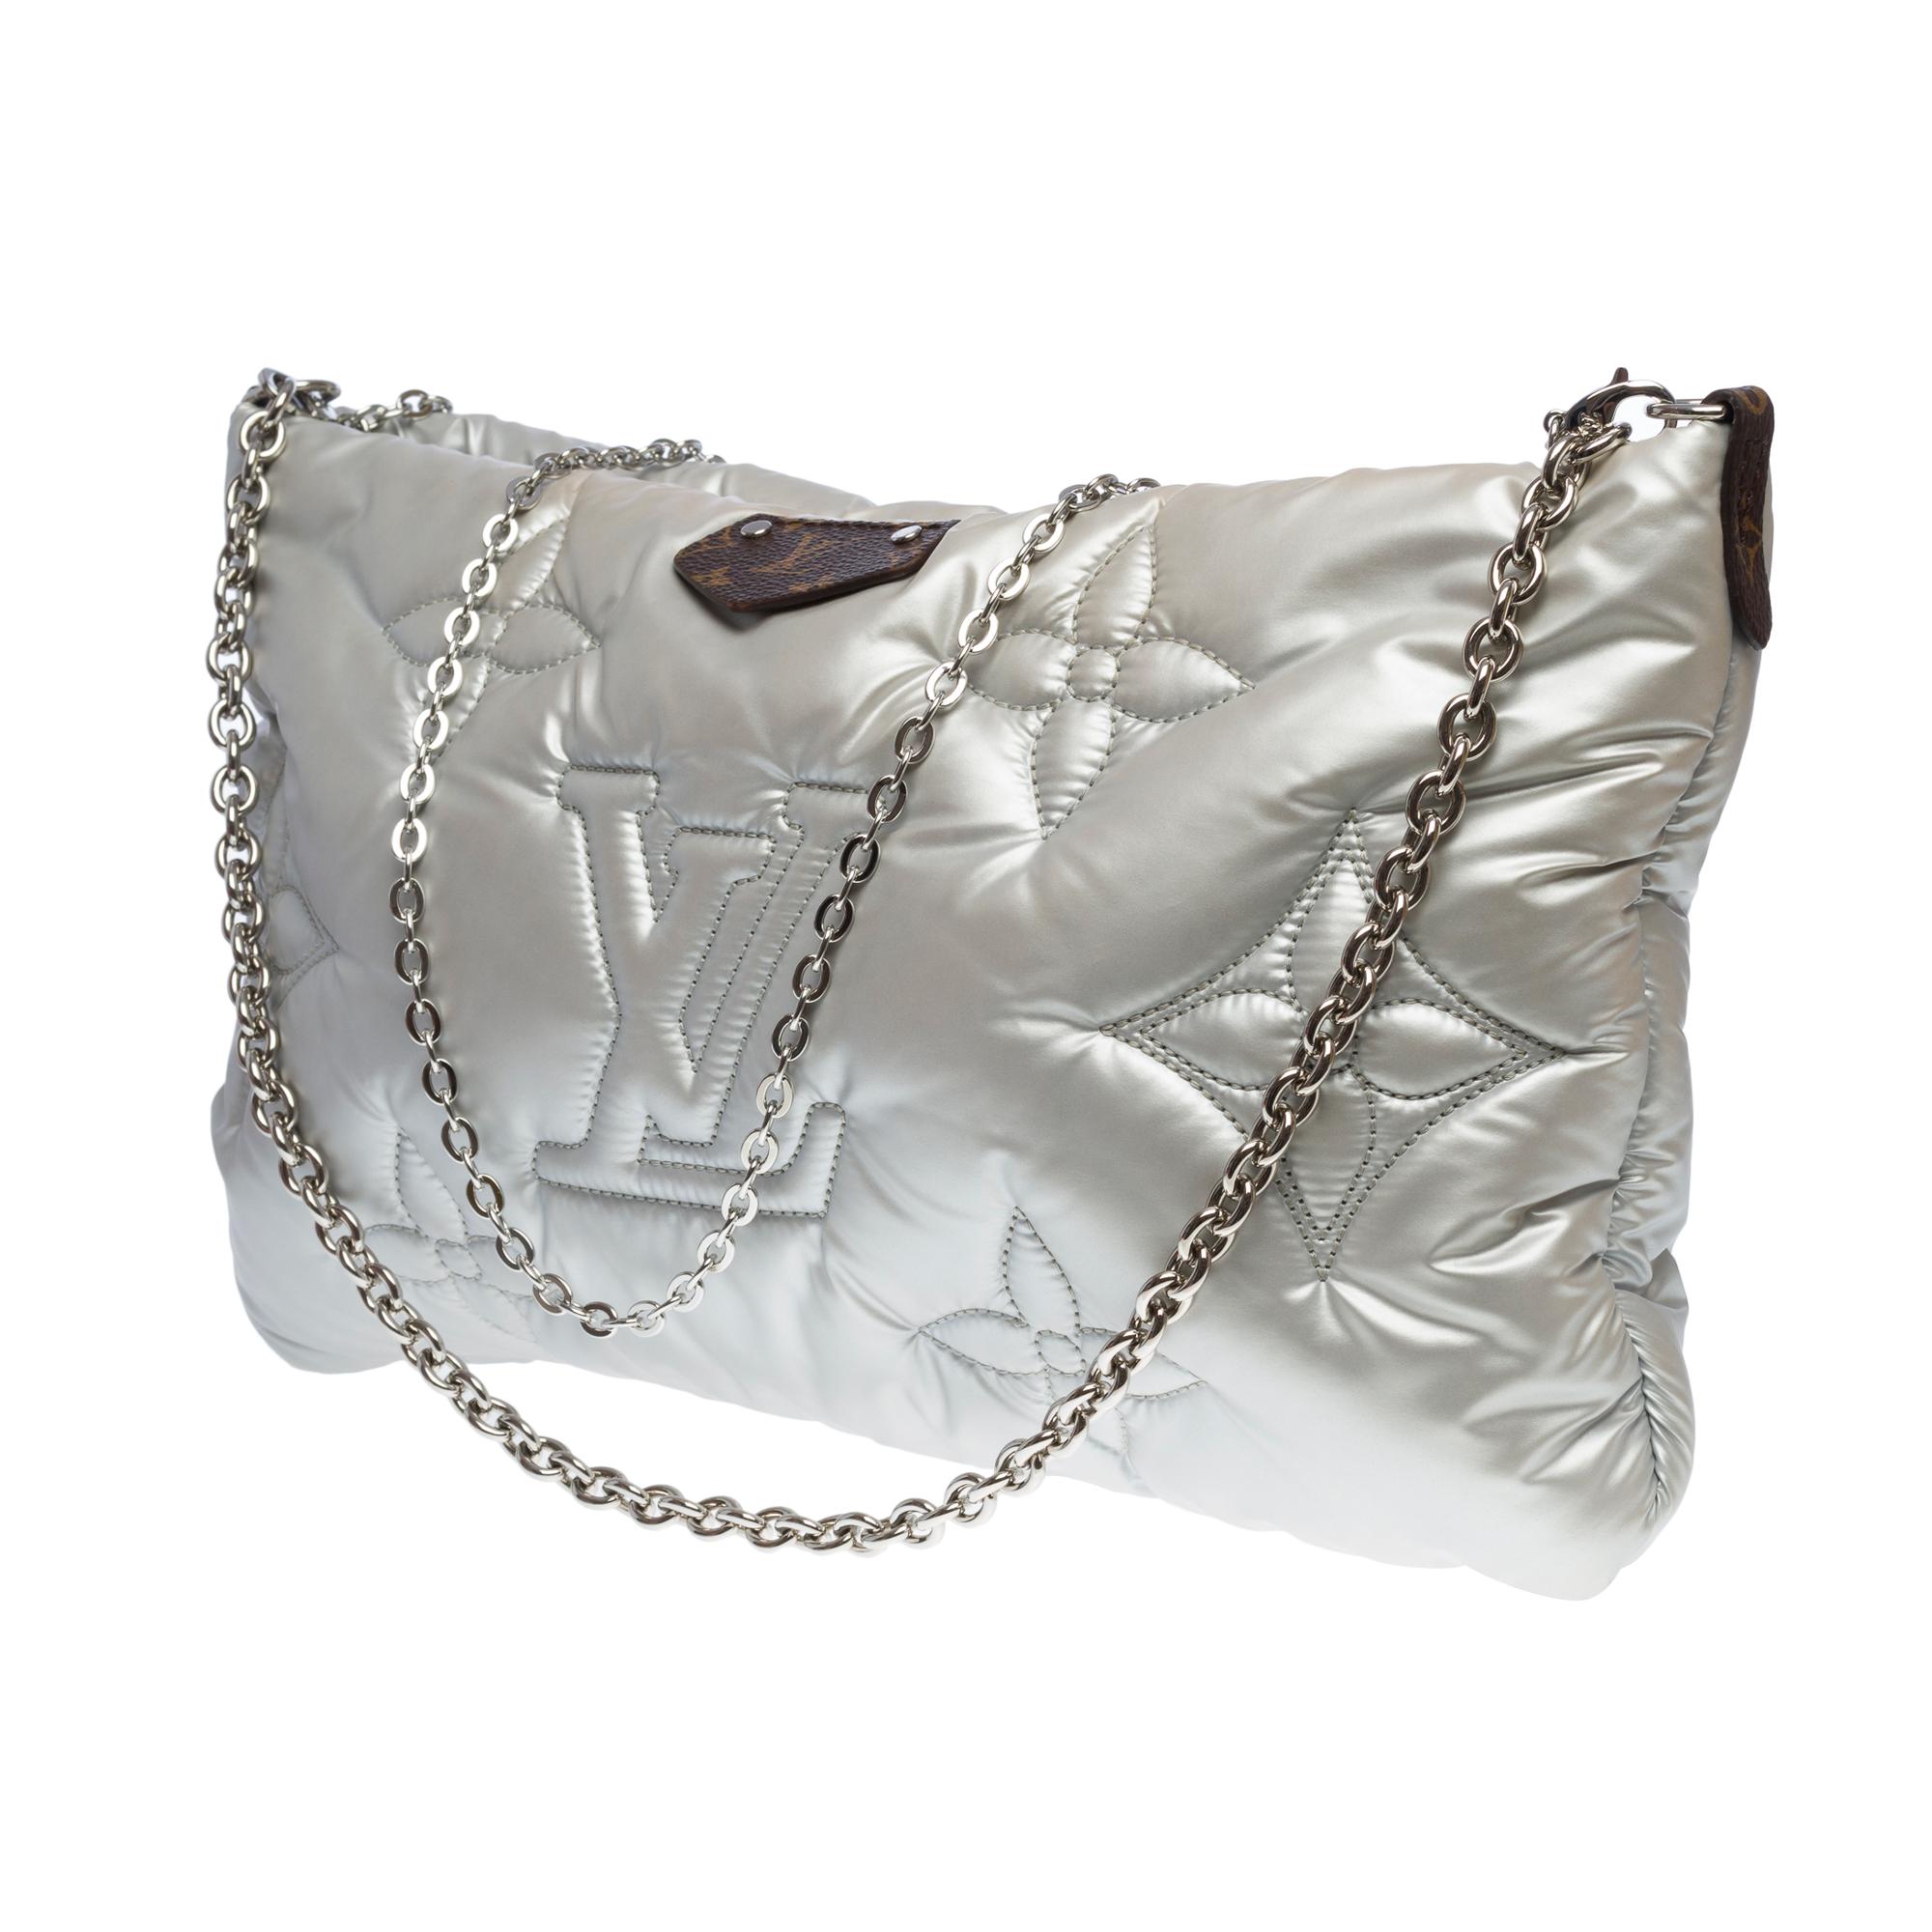 Women's or Men's Louis Vuitton Pillow capsule Maxi Pochette shoulder bag in silver nylon, SHW